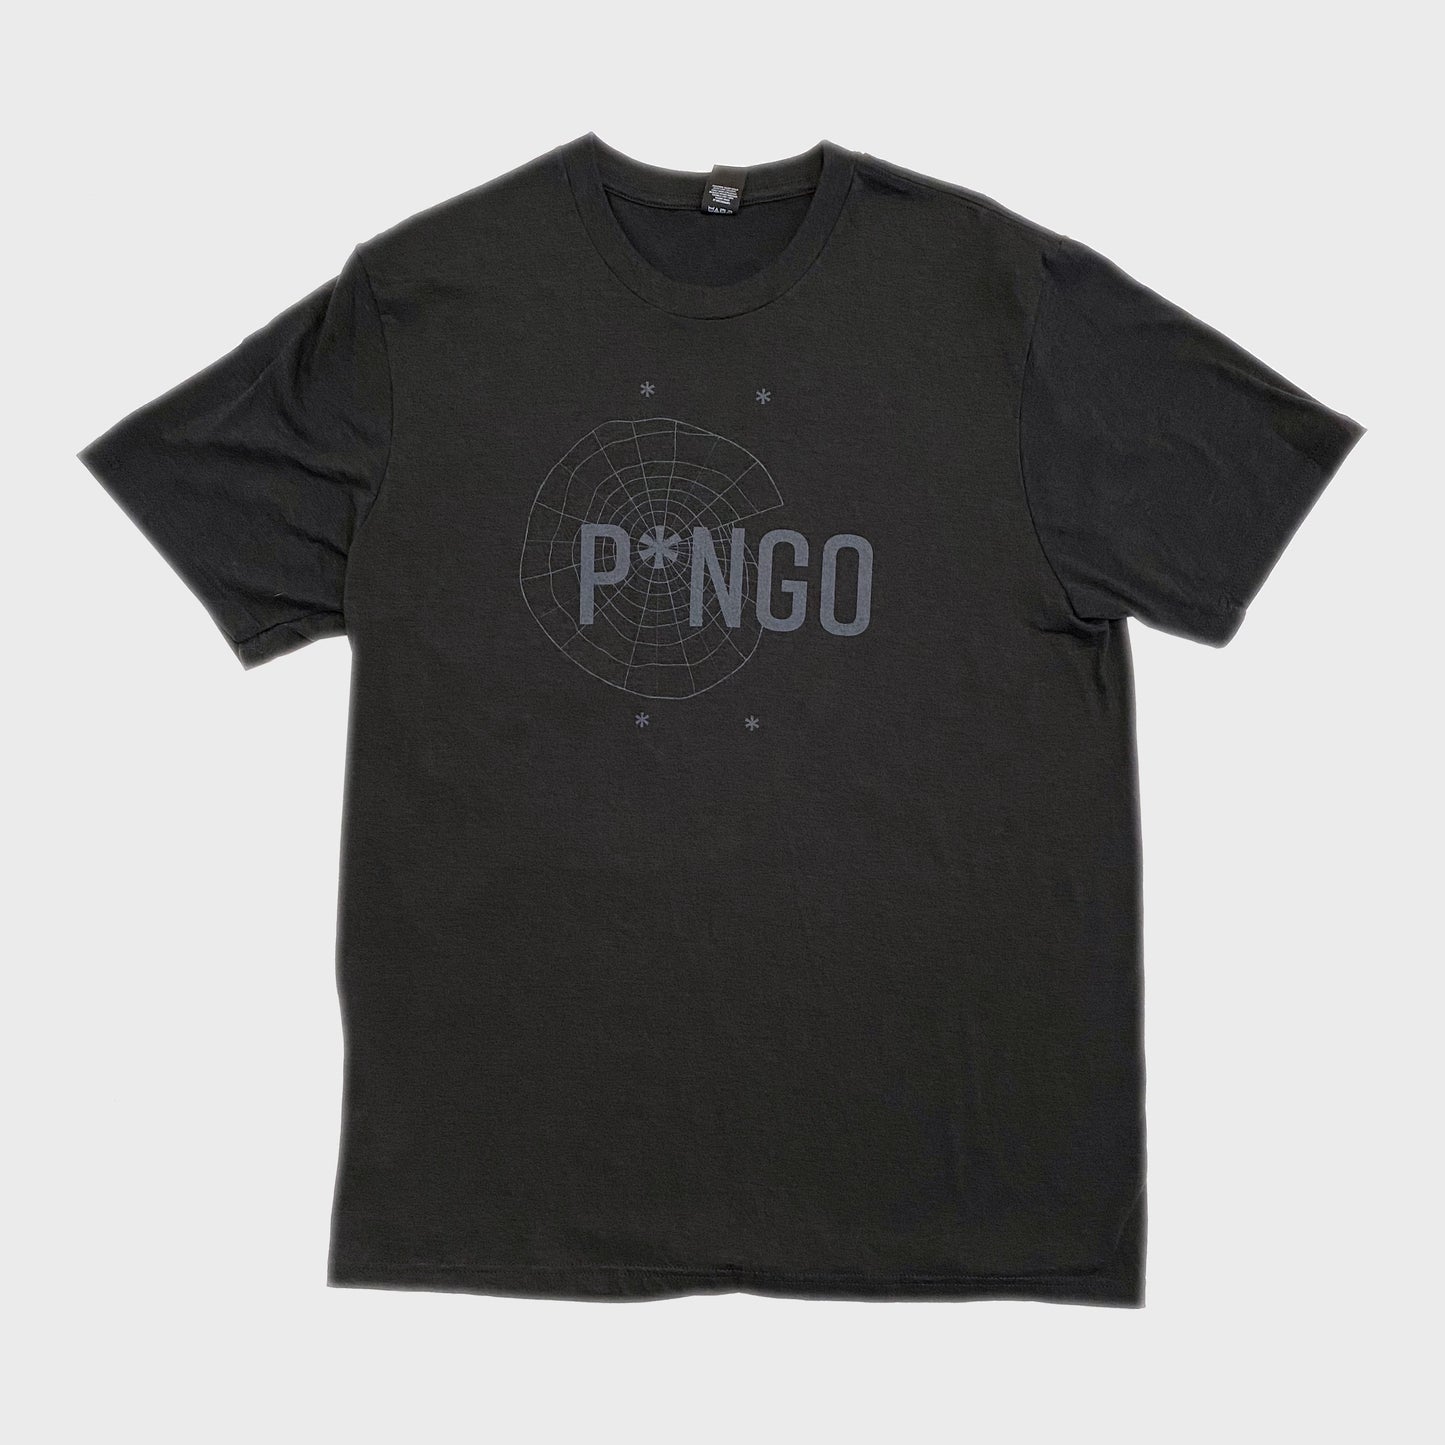 T-Shirt: Pingo, Women's, Black Frost